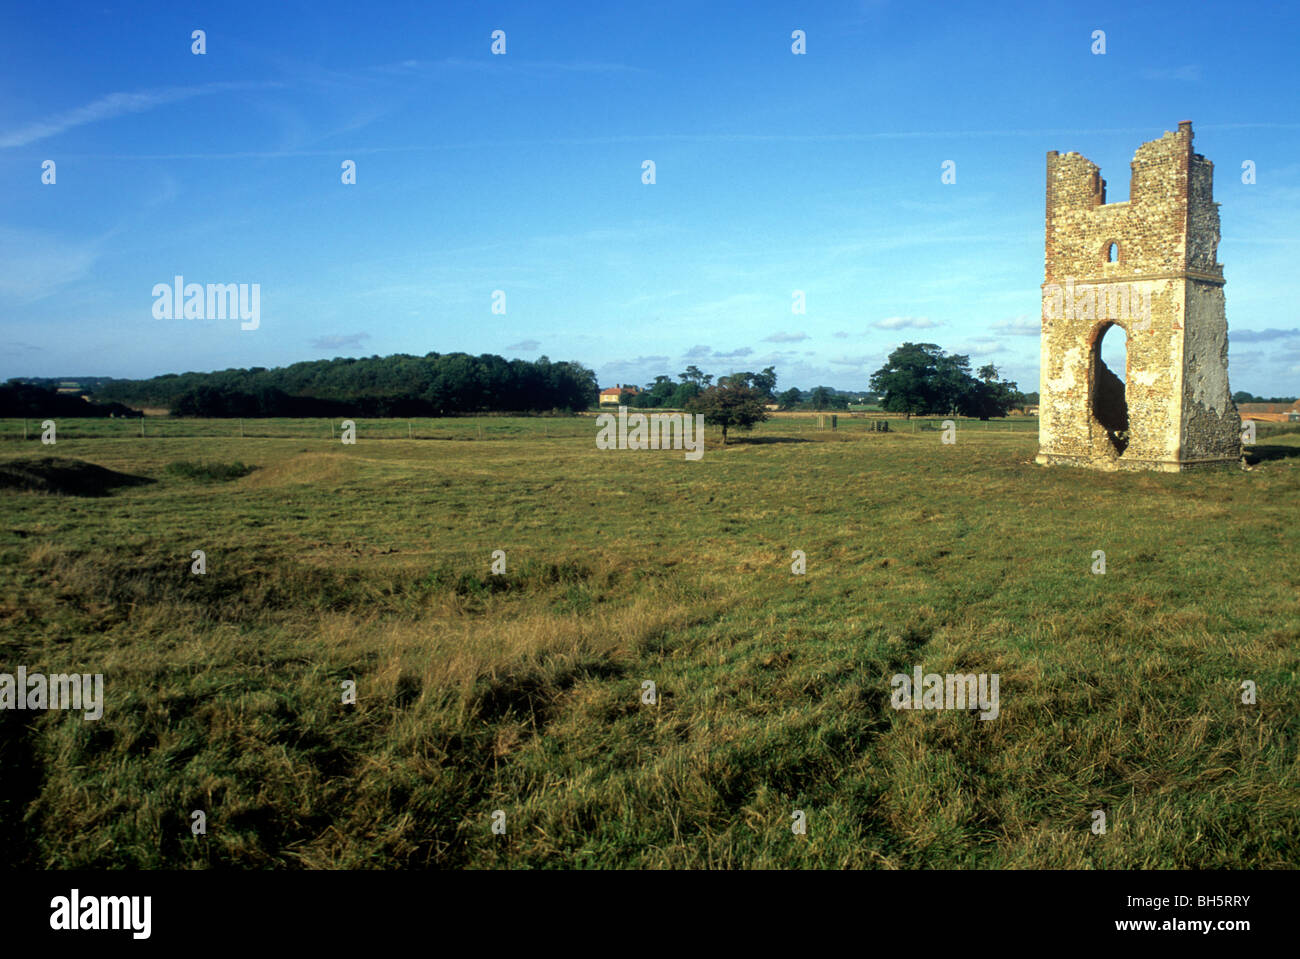 Godwick, Norfolk. verlorenen mittelalterlichen Wüstung Ruinen Kirche englische Dörfer zerstörte East Anglia England UK Turm Kirchen Stockfoto